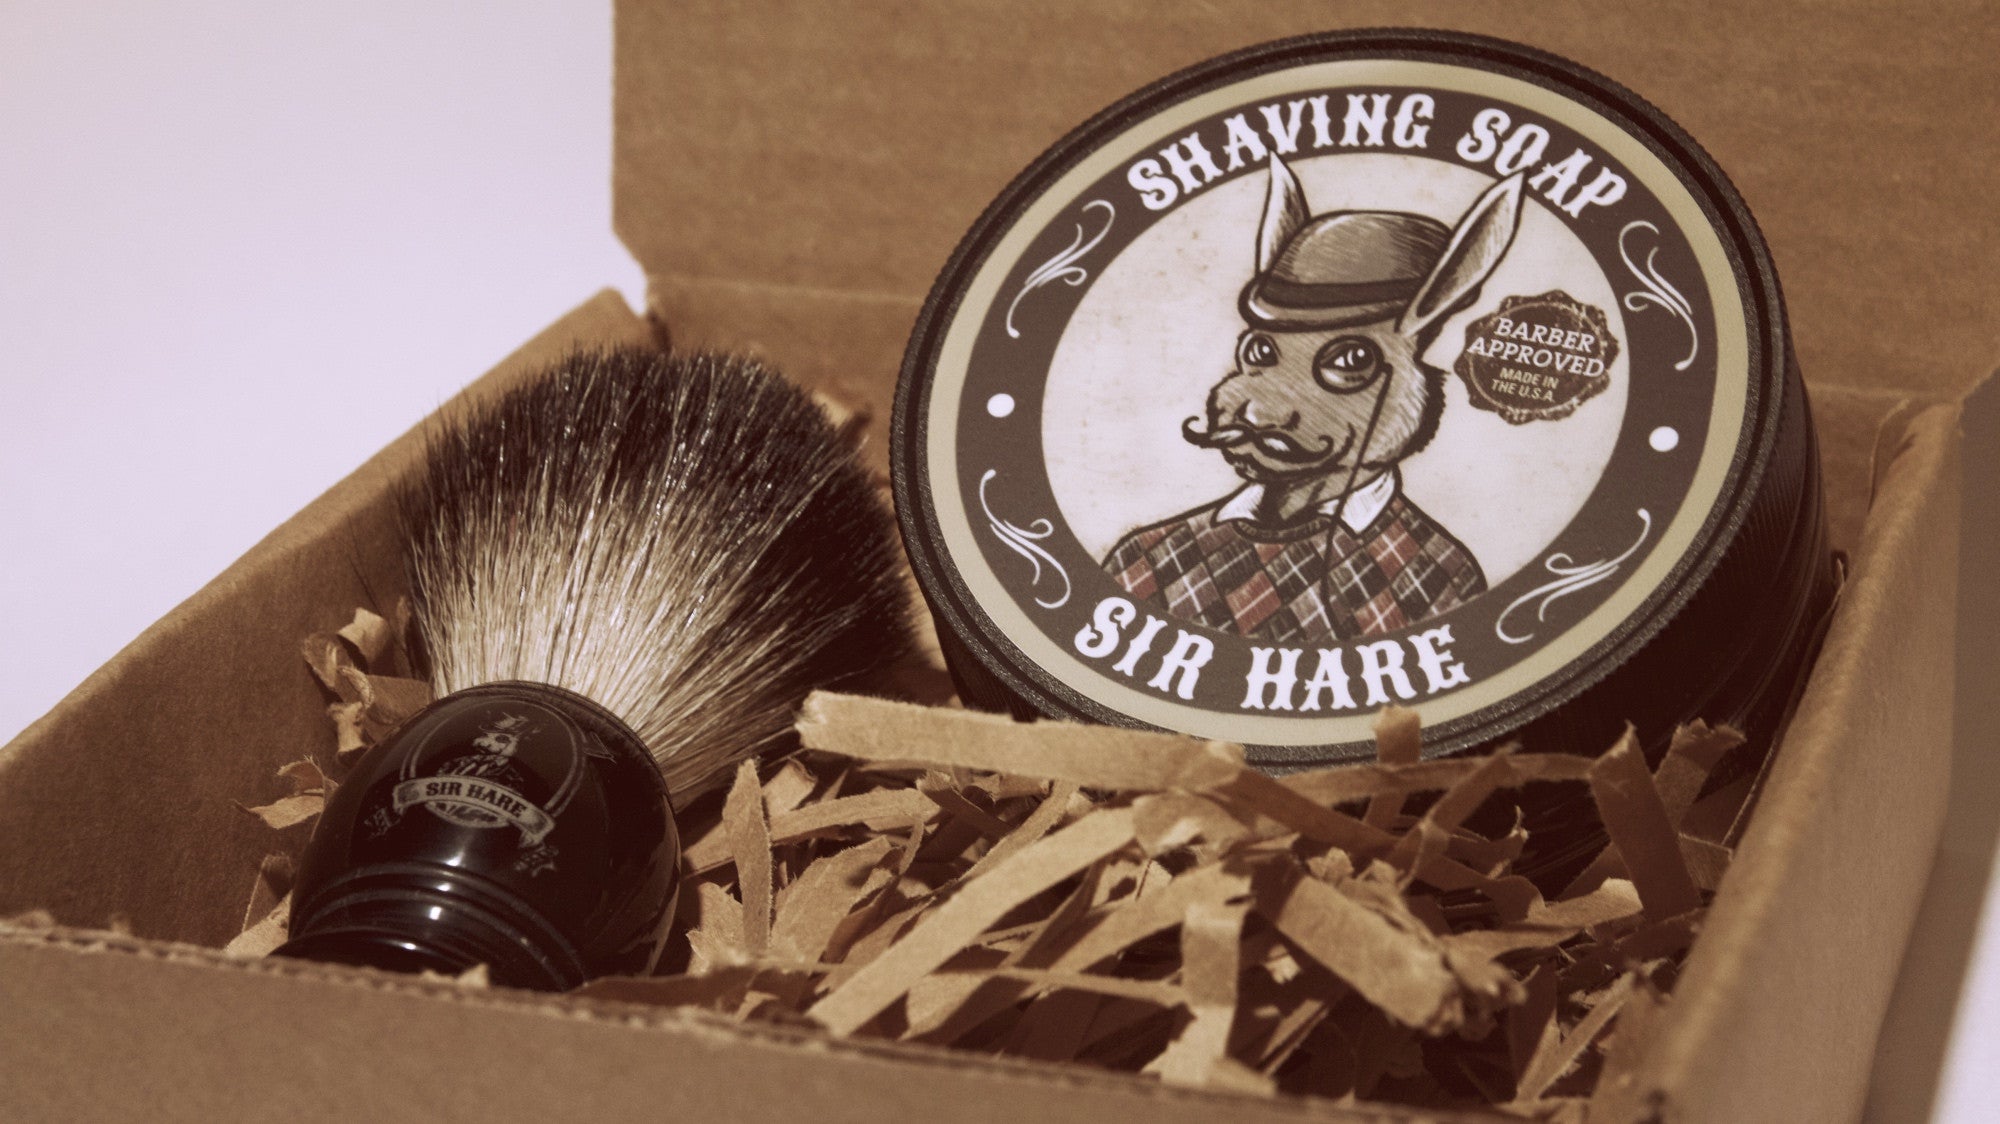 Shaving brush kit with Brush and Soap